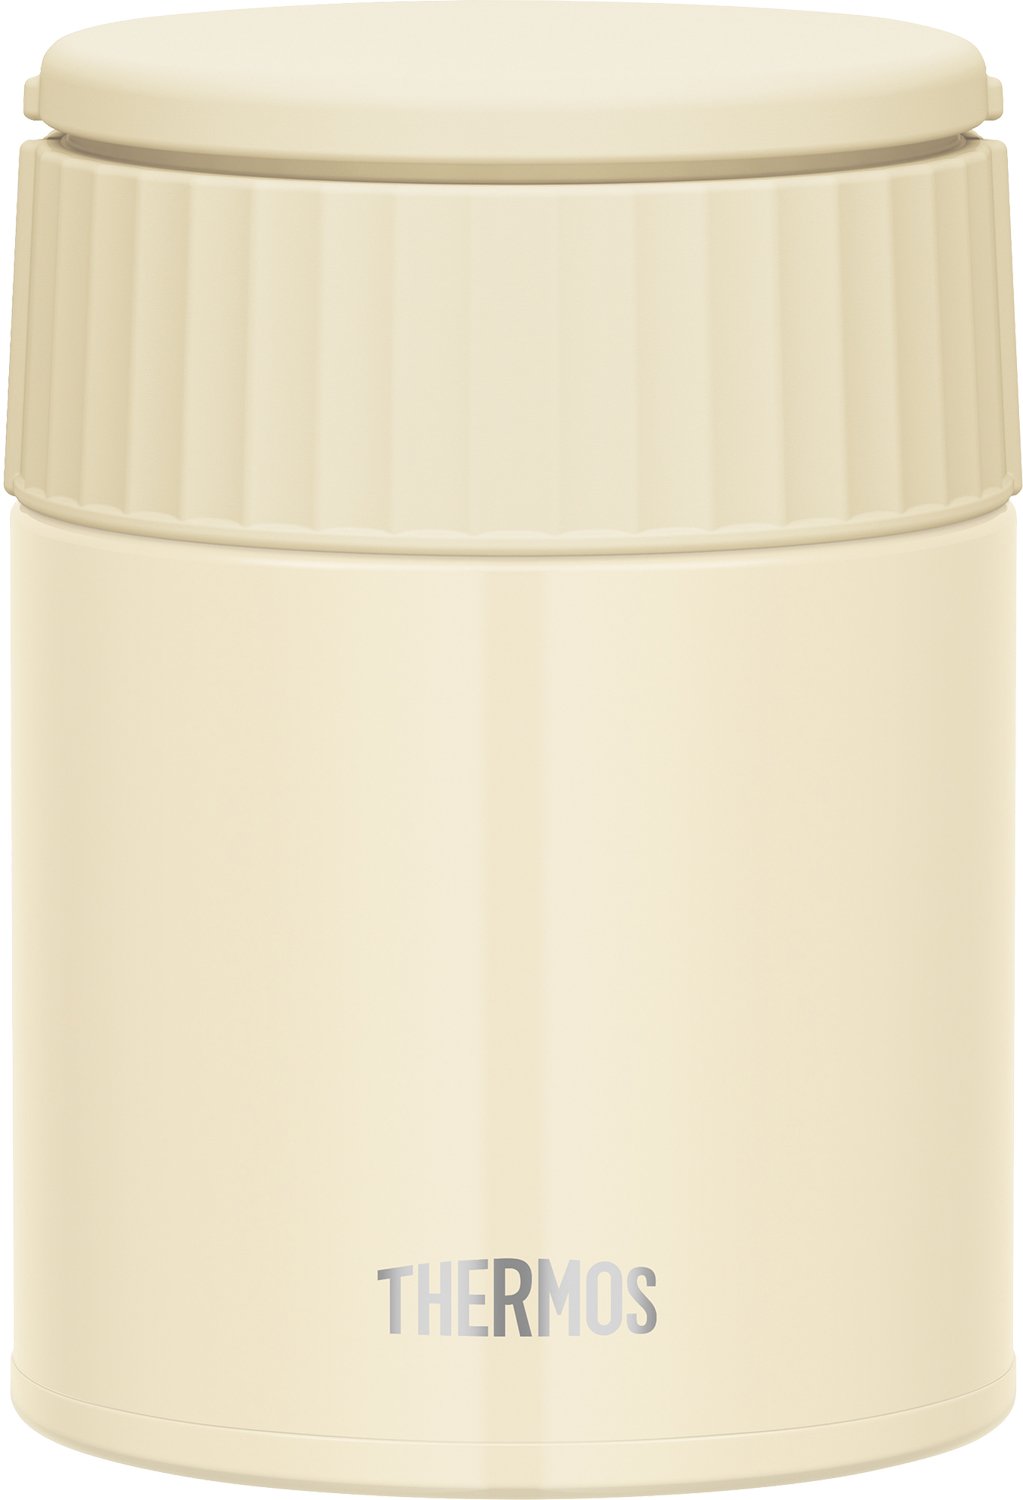 Thermos 400ml Lunch Jar JBQ-401 Vanilla - Vacuum Insulated